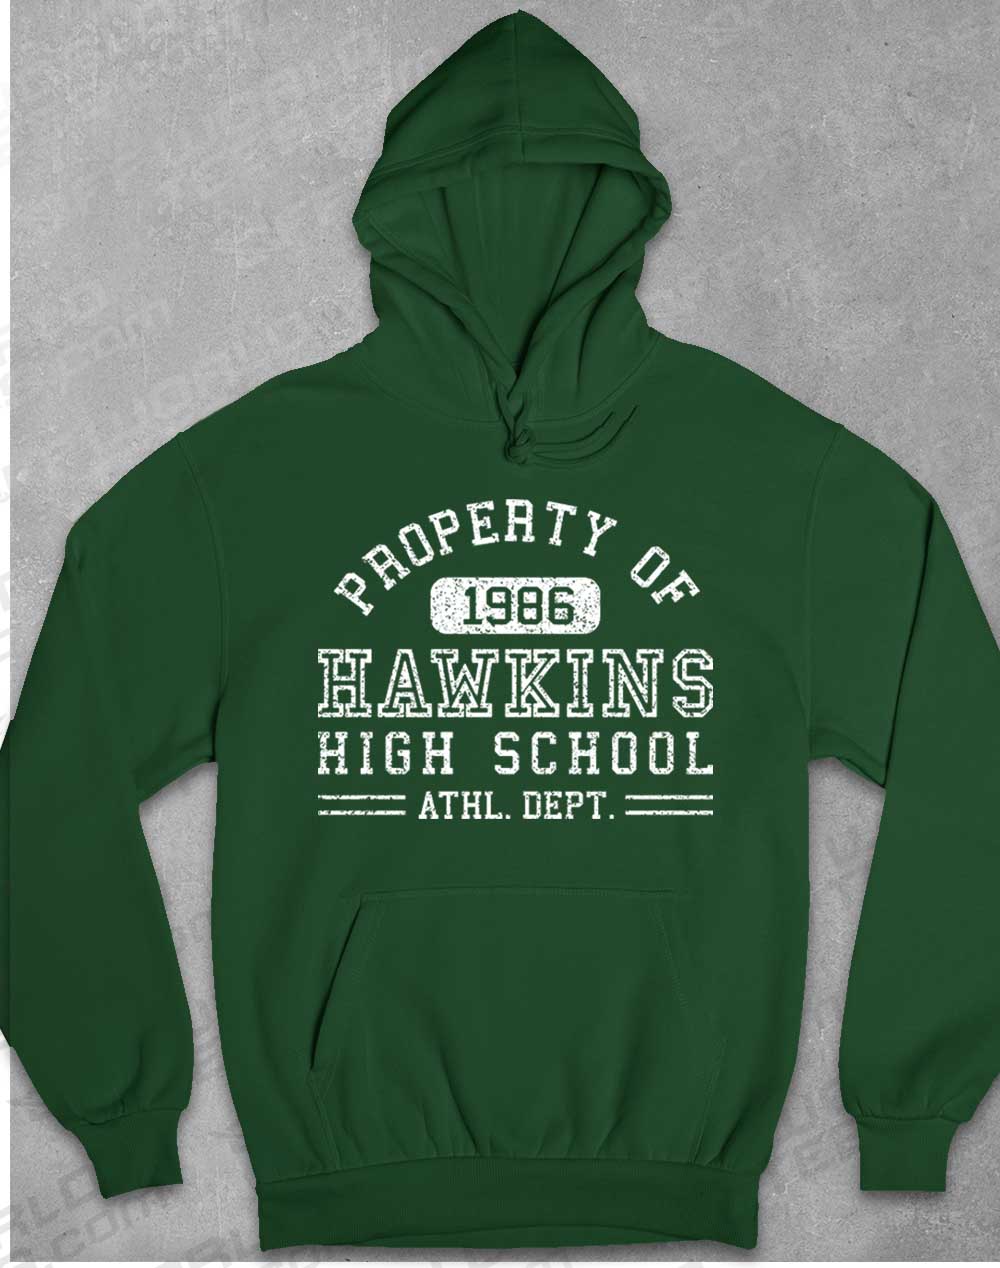 Bottle Green - Hawkins High School Athletics 1986 Hoodie